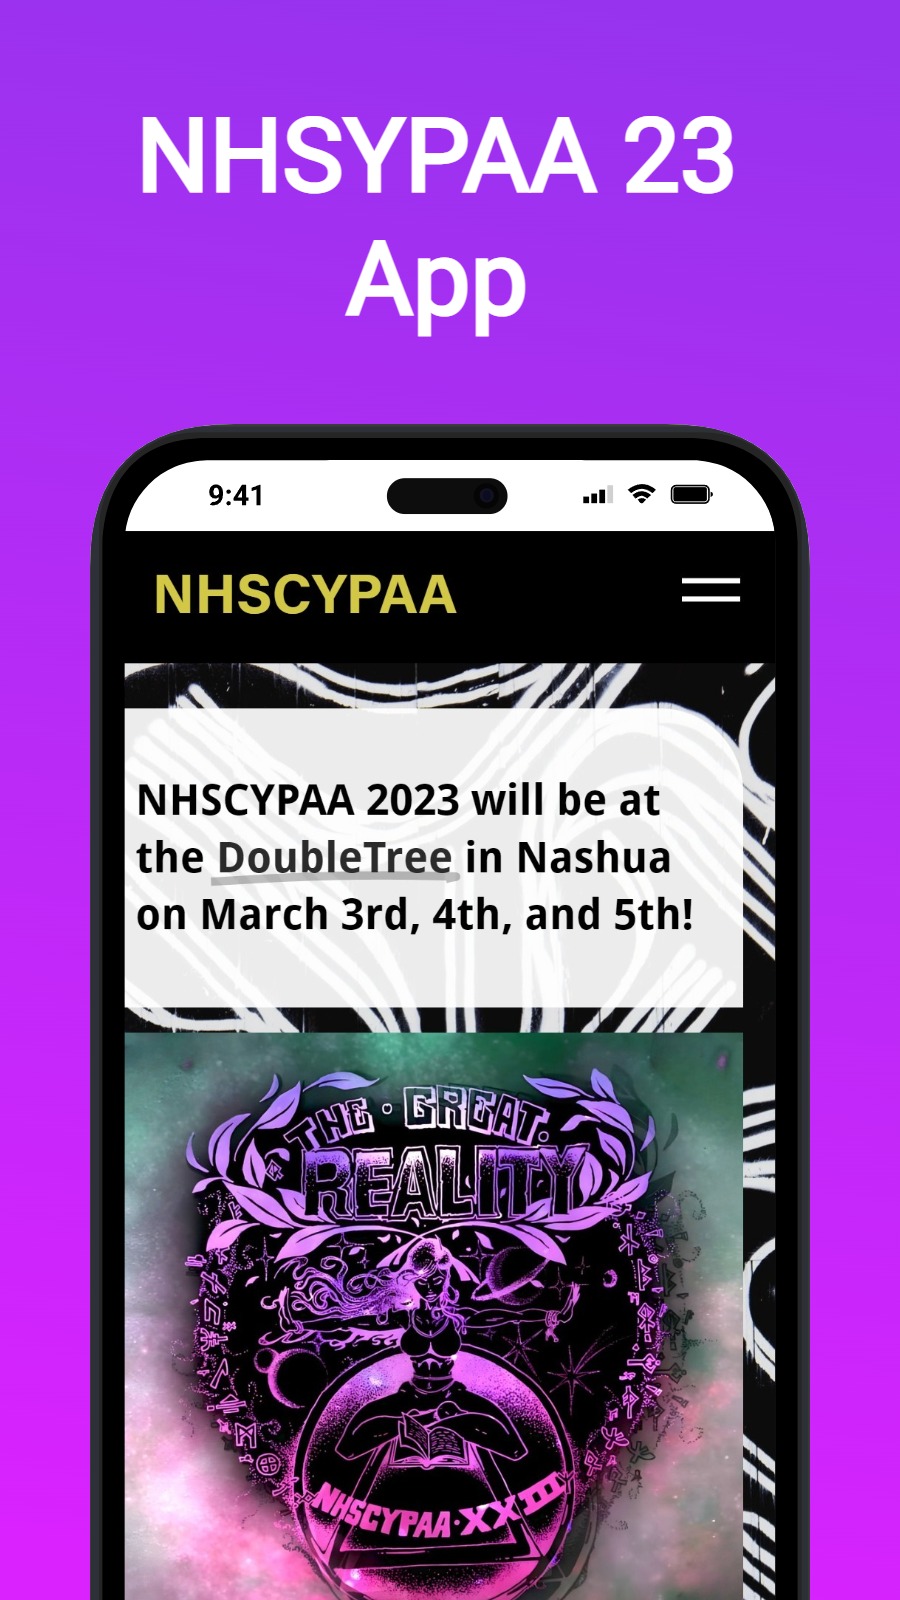 NHSYPAA 23 App